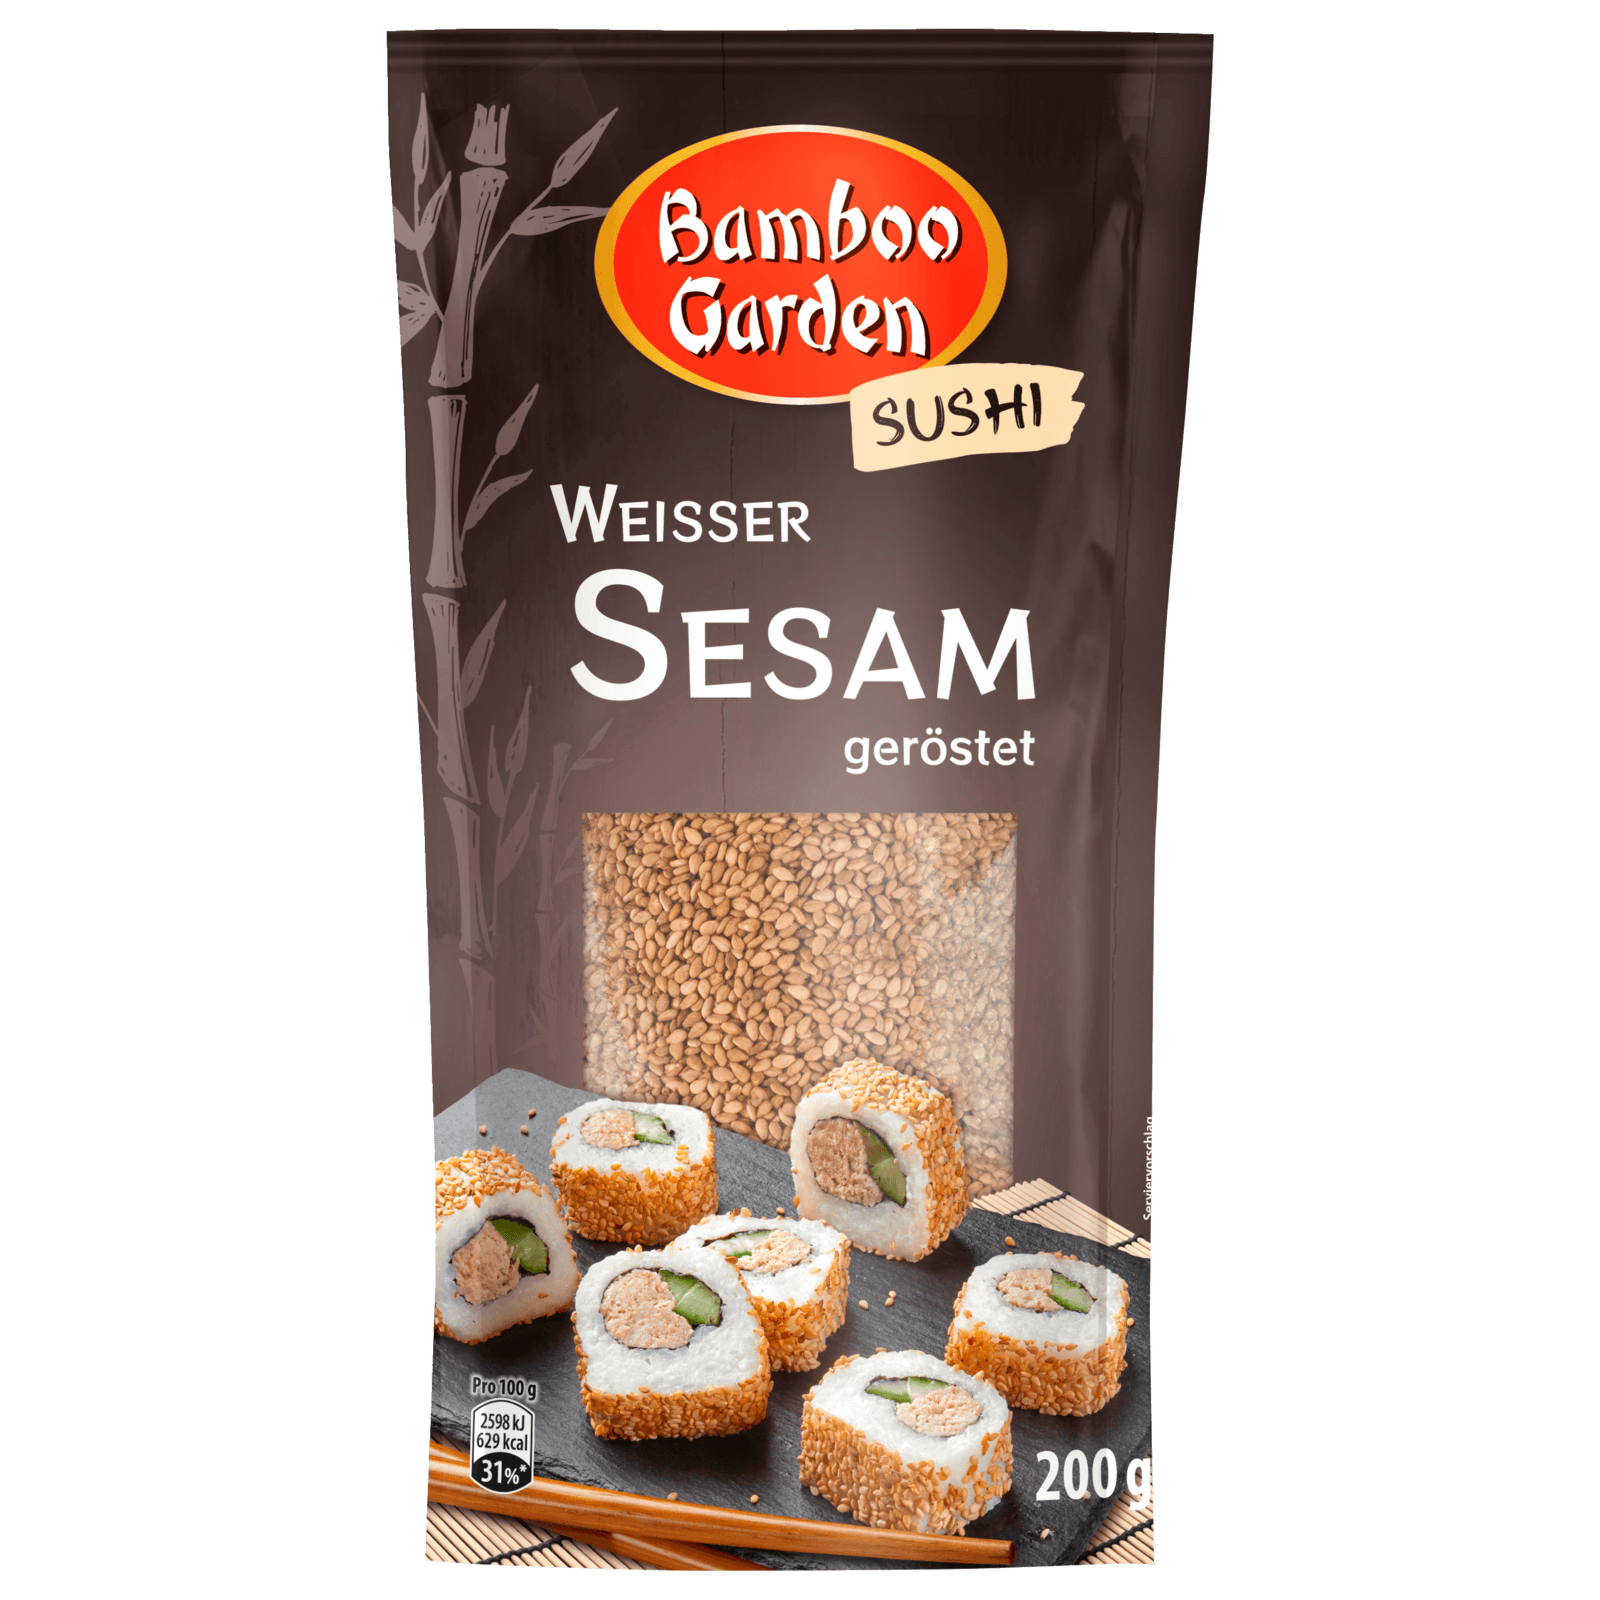 Bamboo Garden Sesam weiß geröstet 200g bei REWE online bestellen!